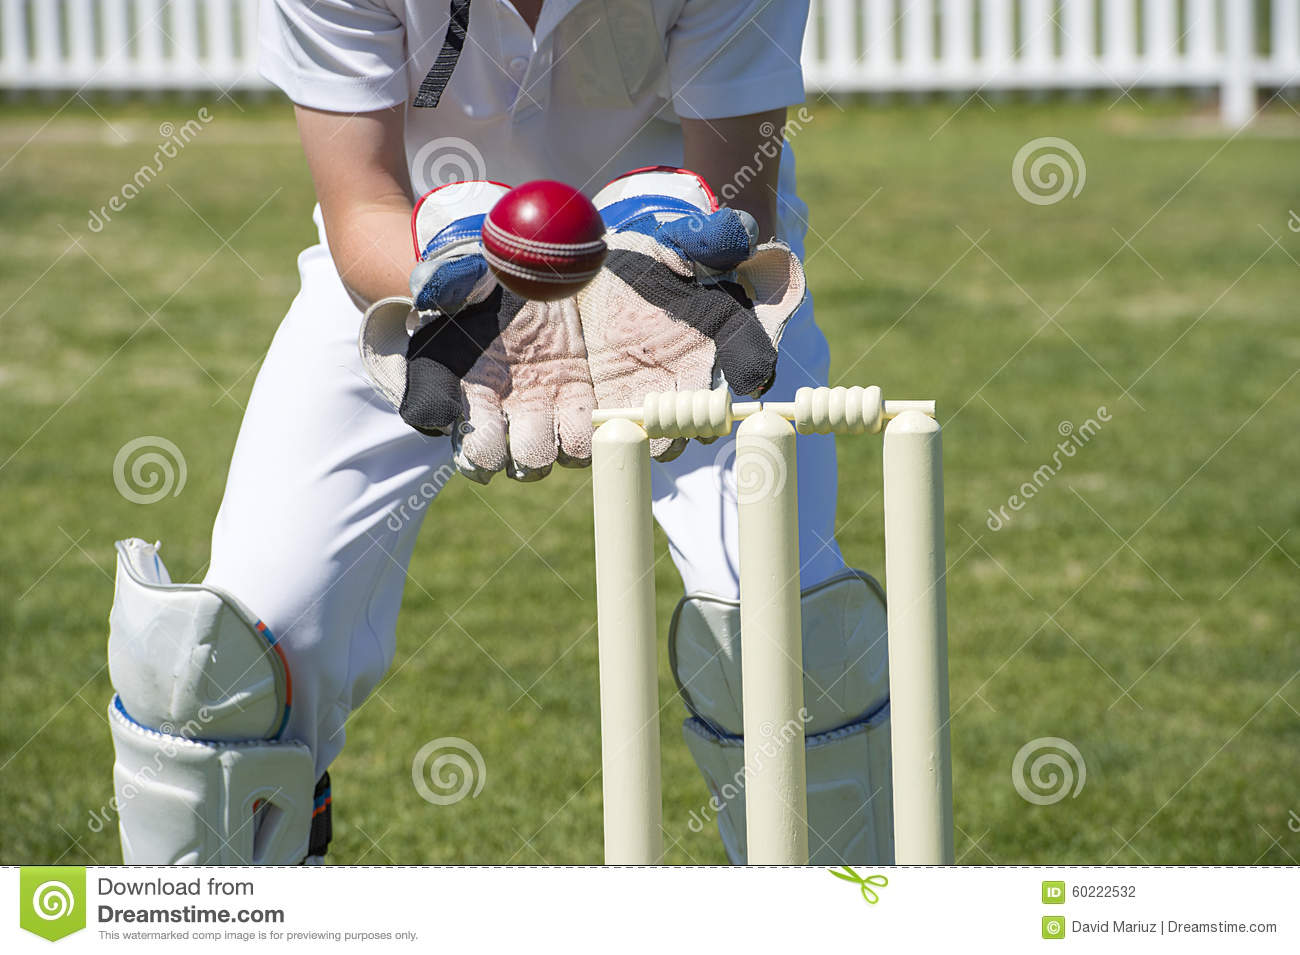 Cricket wicket keeper stock photos